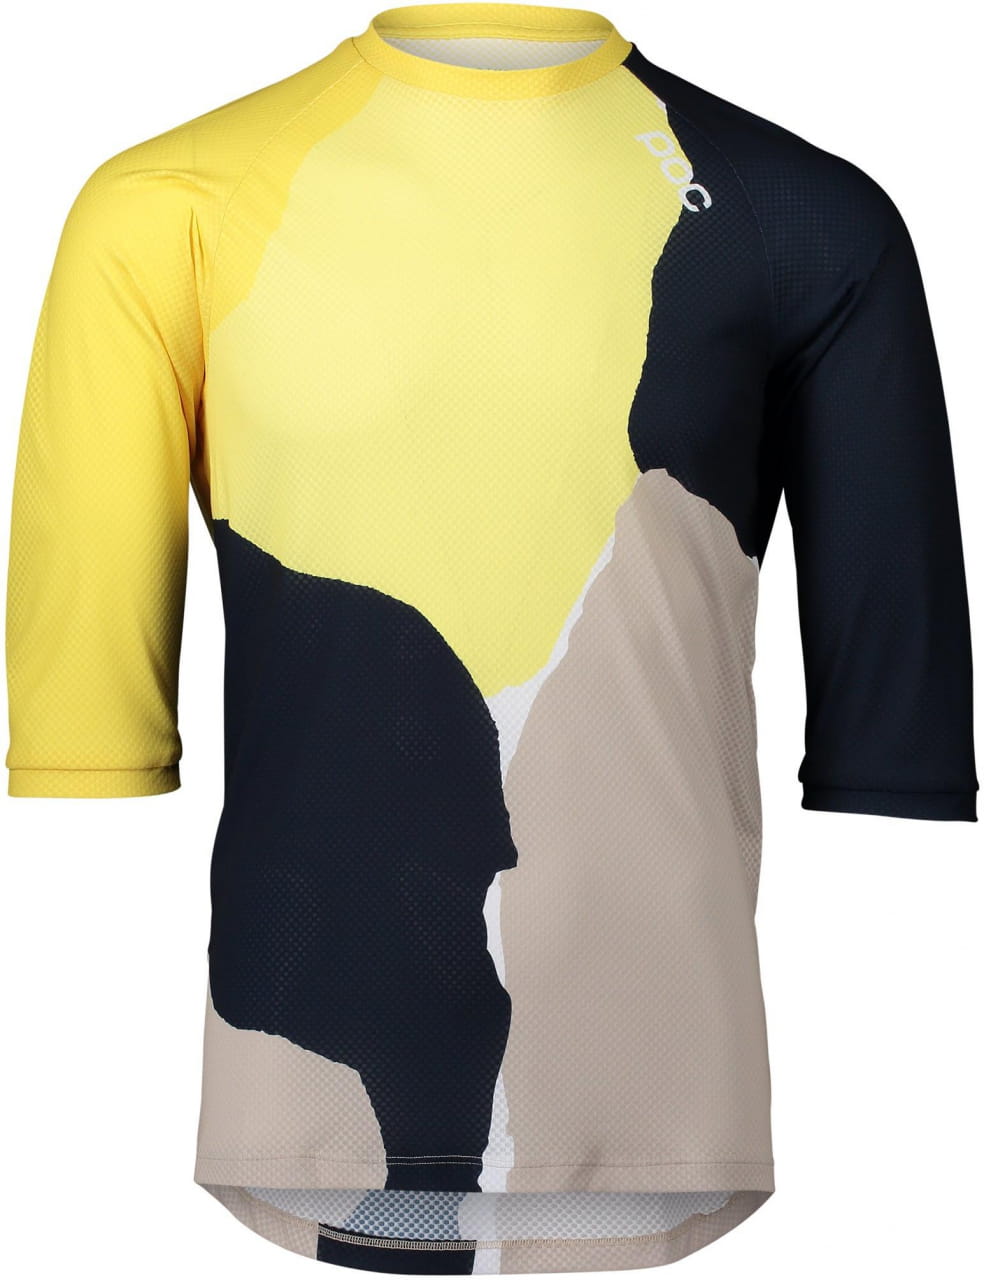 Unisex jersey POC Mtb Pure 3/4 Jersey Color Splashes